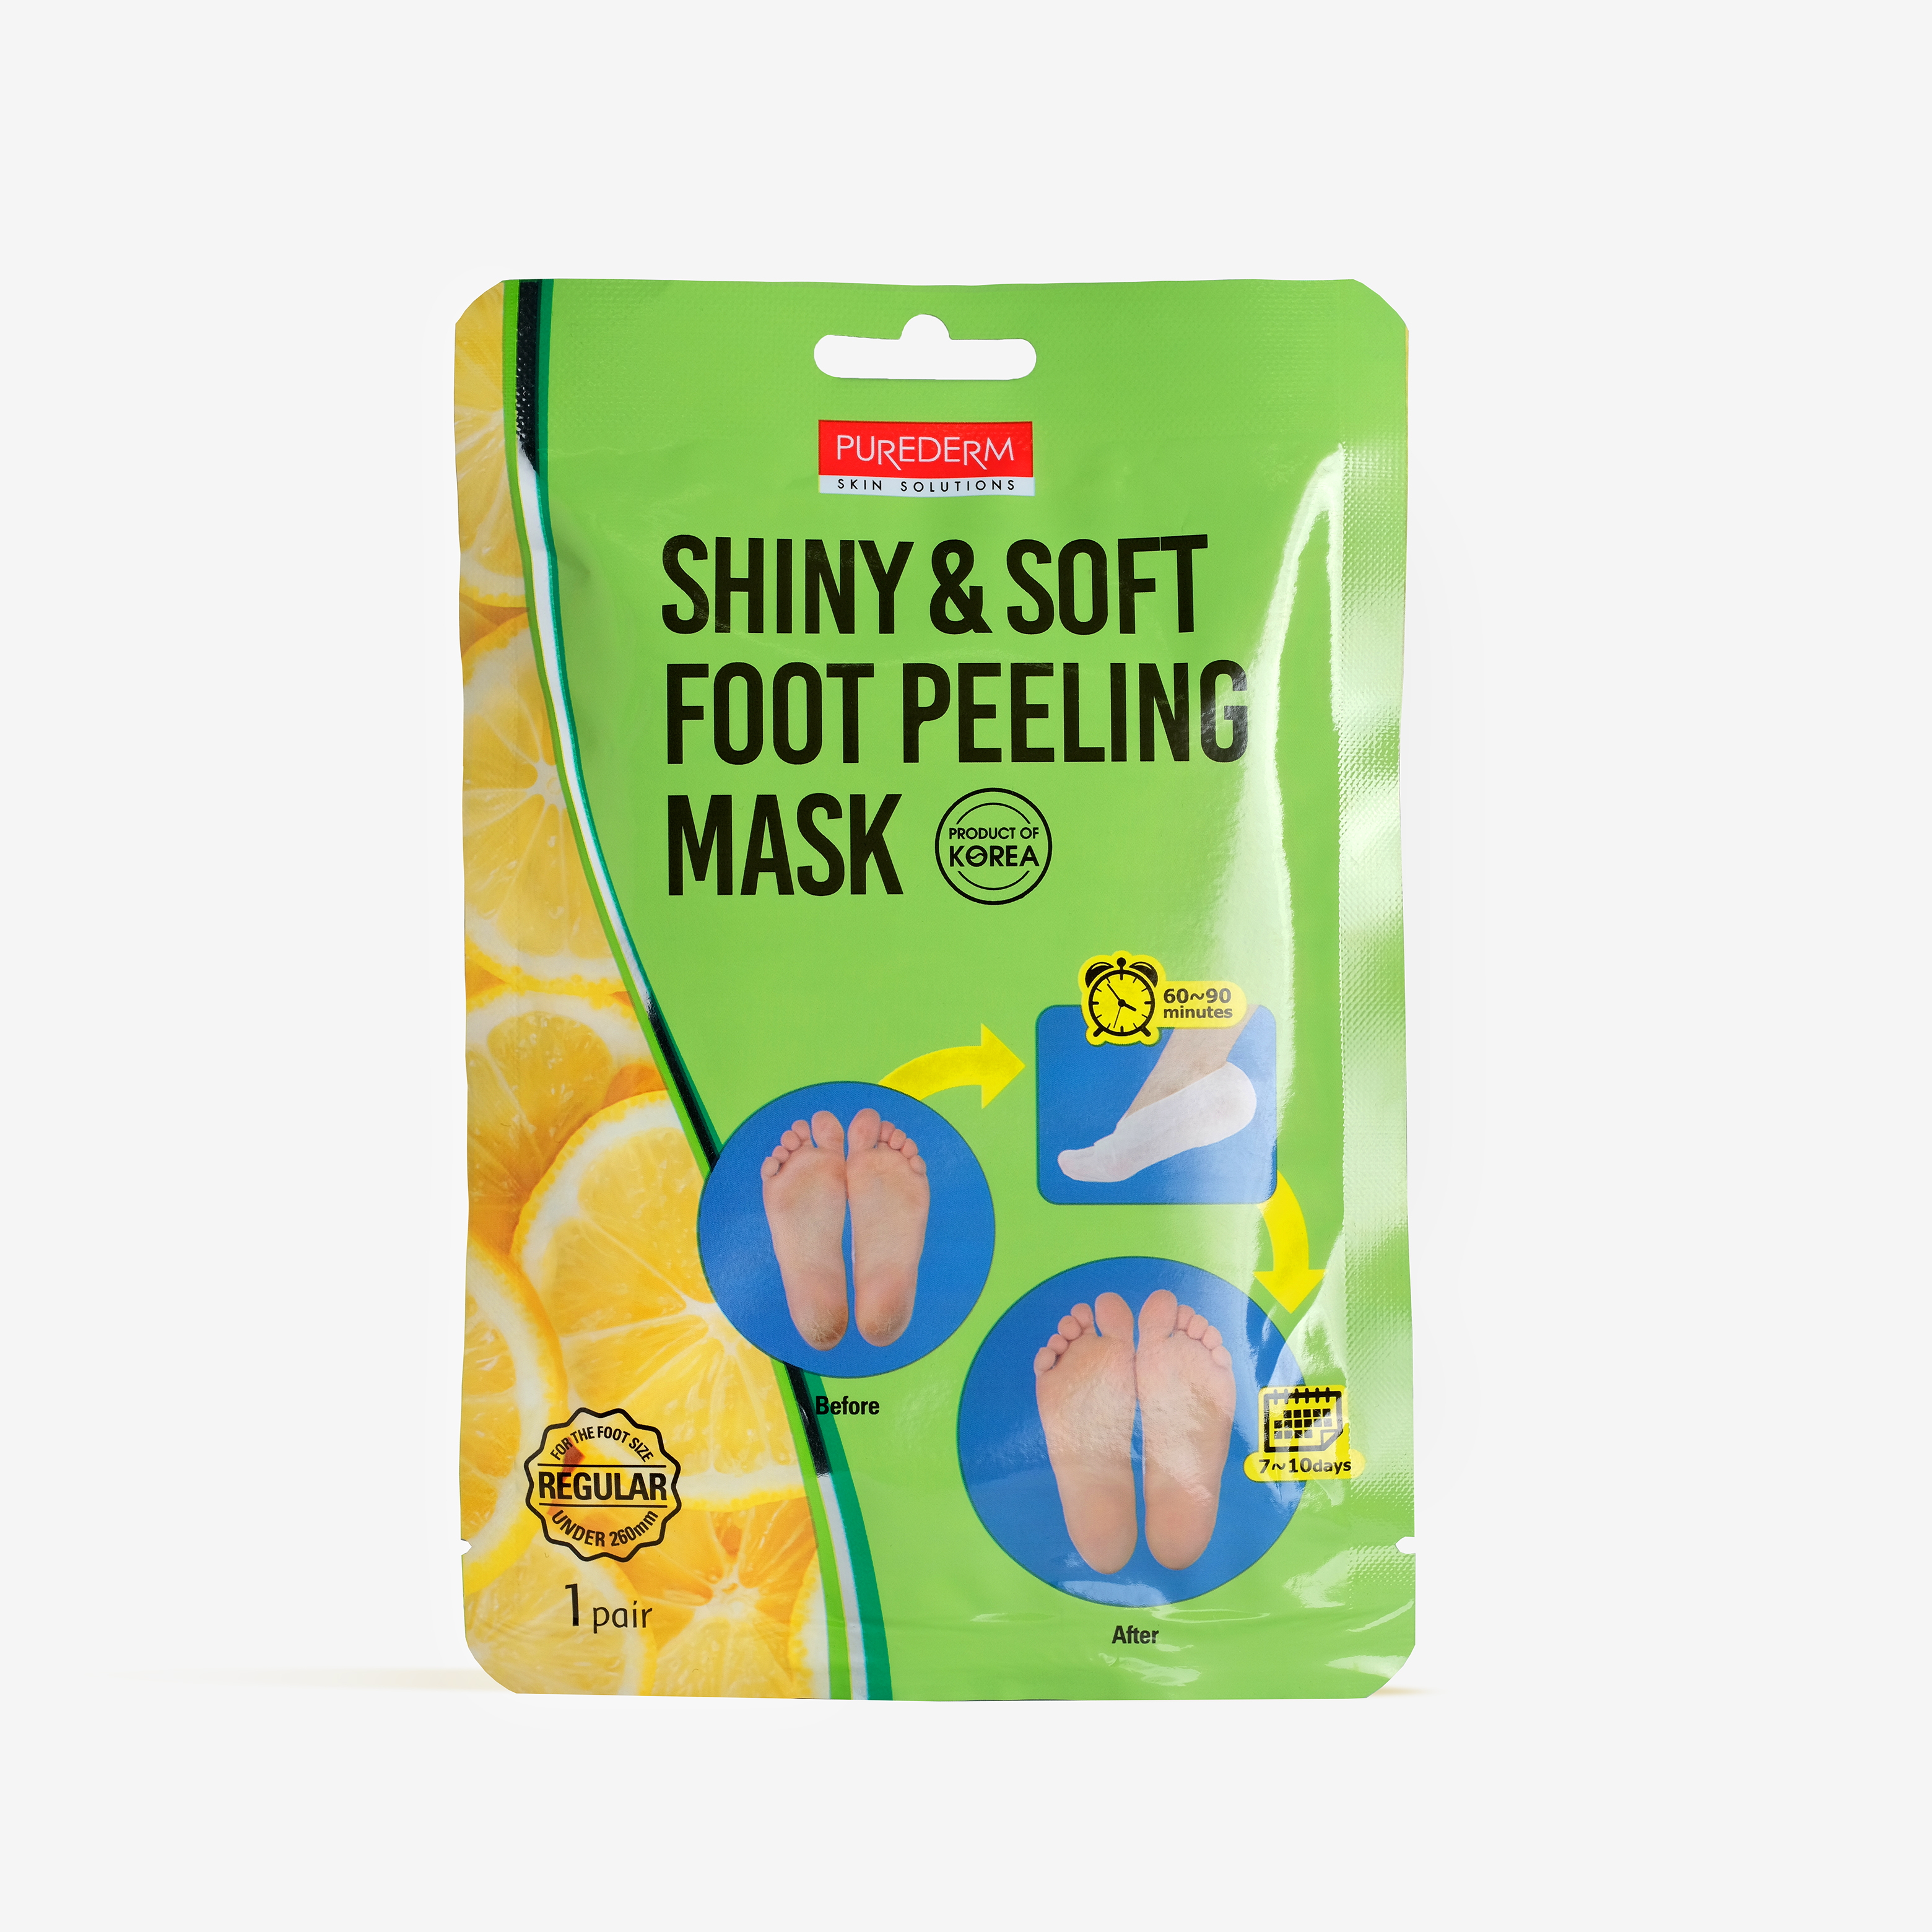 Shiny & soft foot peeling mask - Purederm